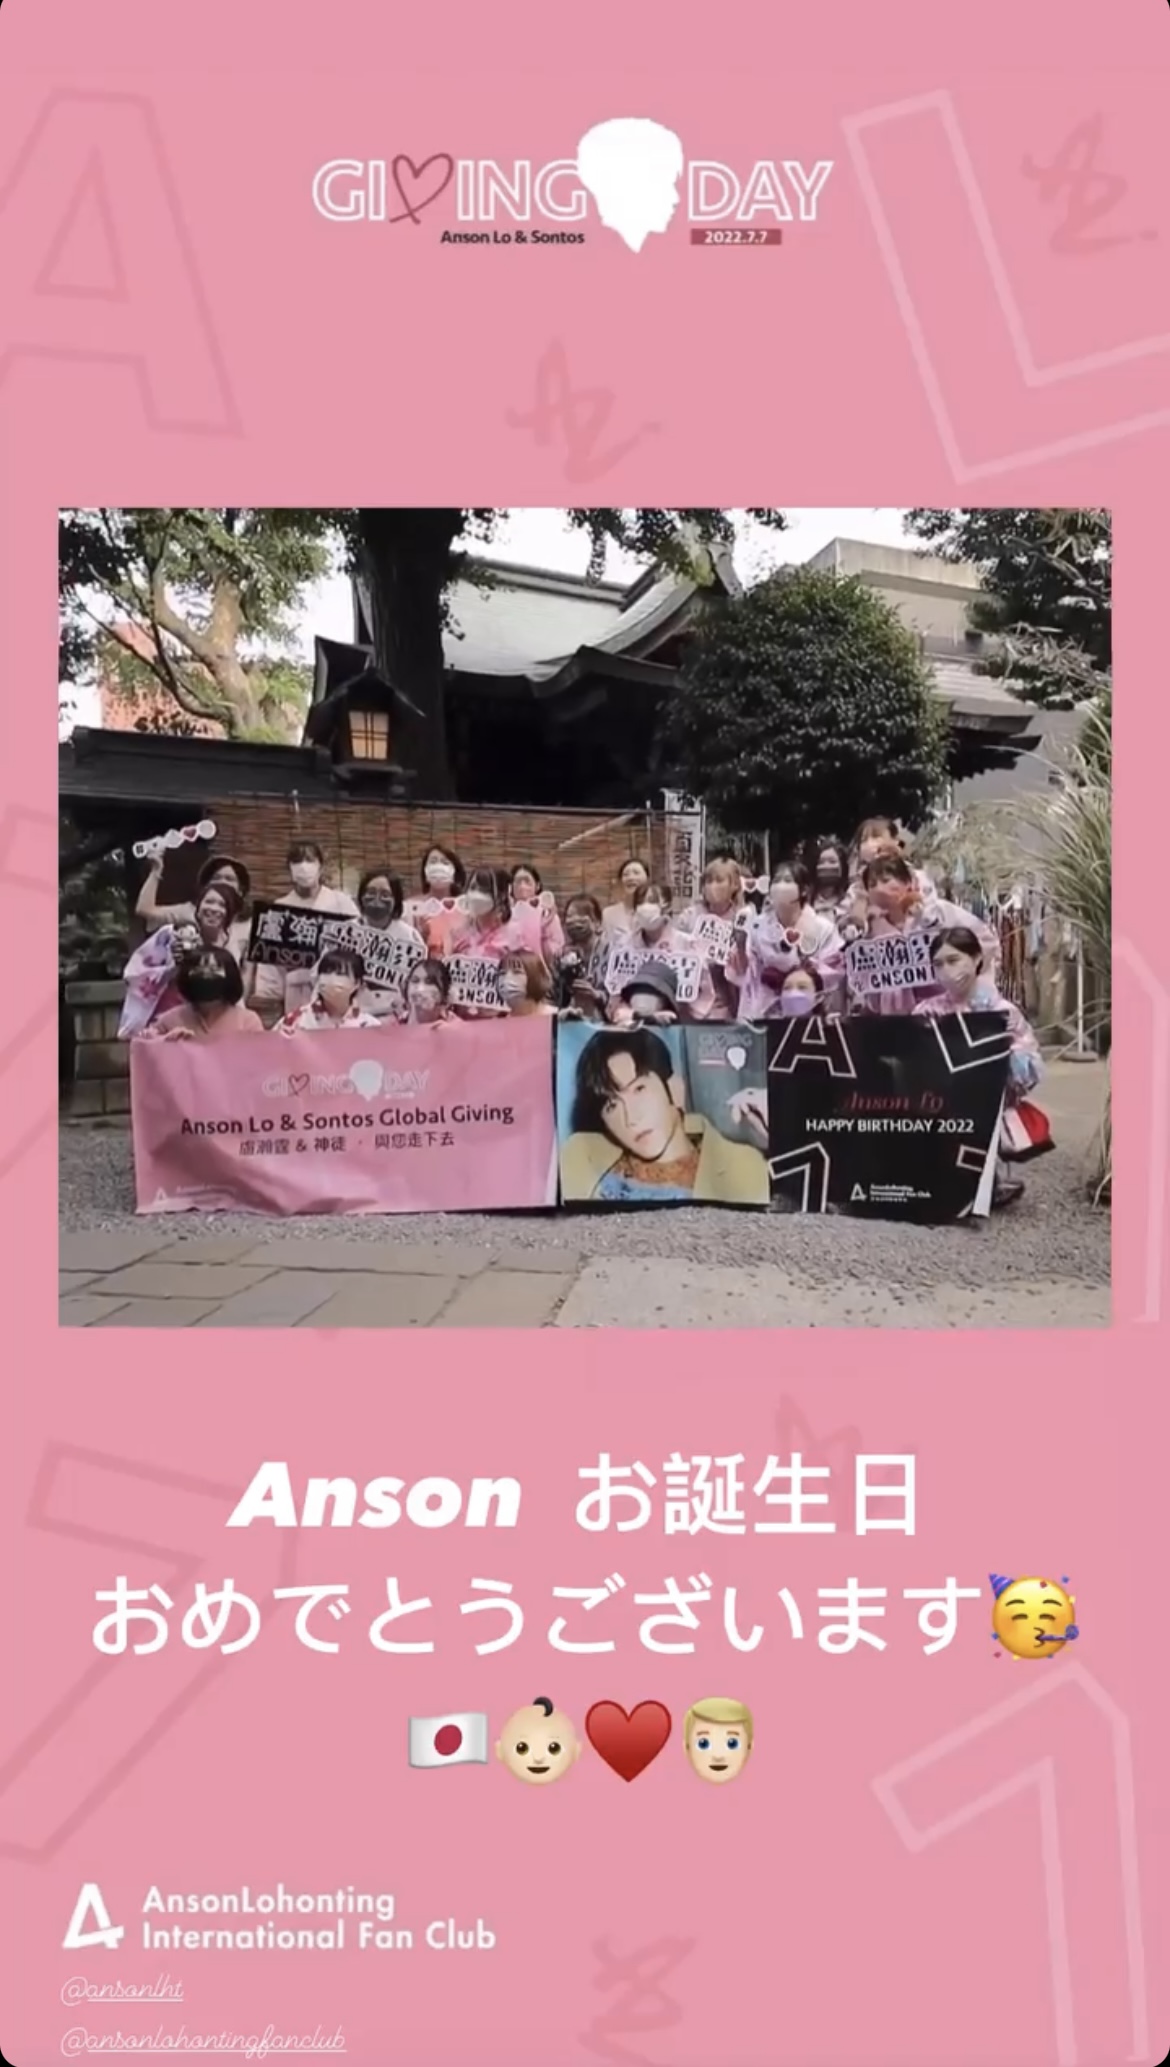 Instagram@ansonlohontingfanclub_jp